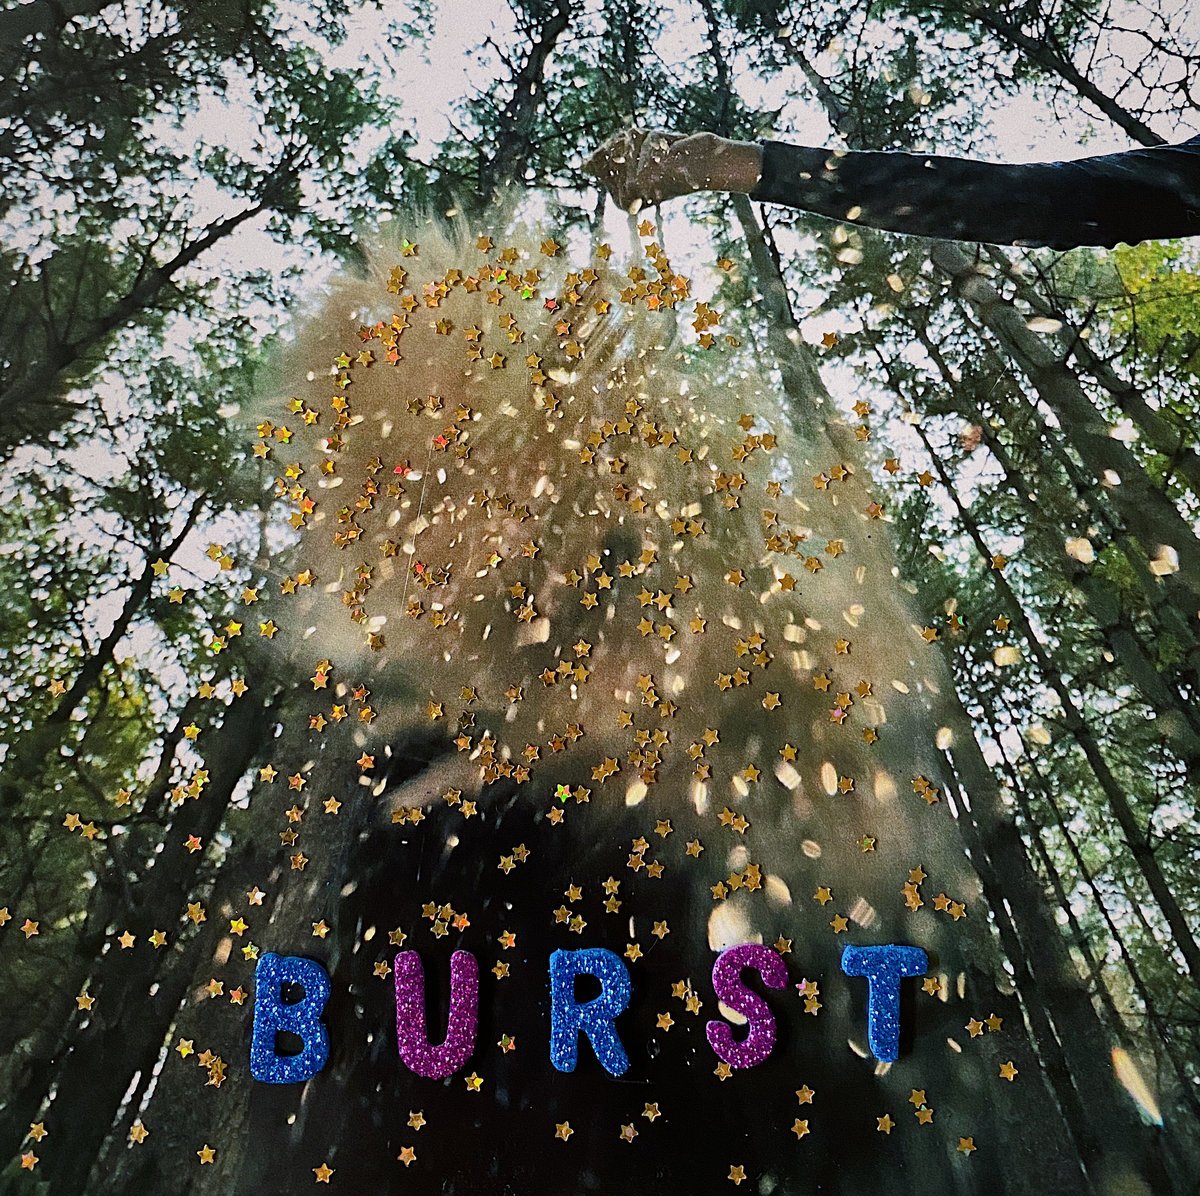 ALBUM REVIEW: Snarls - Burst 